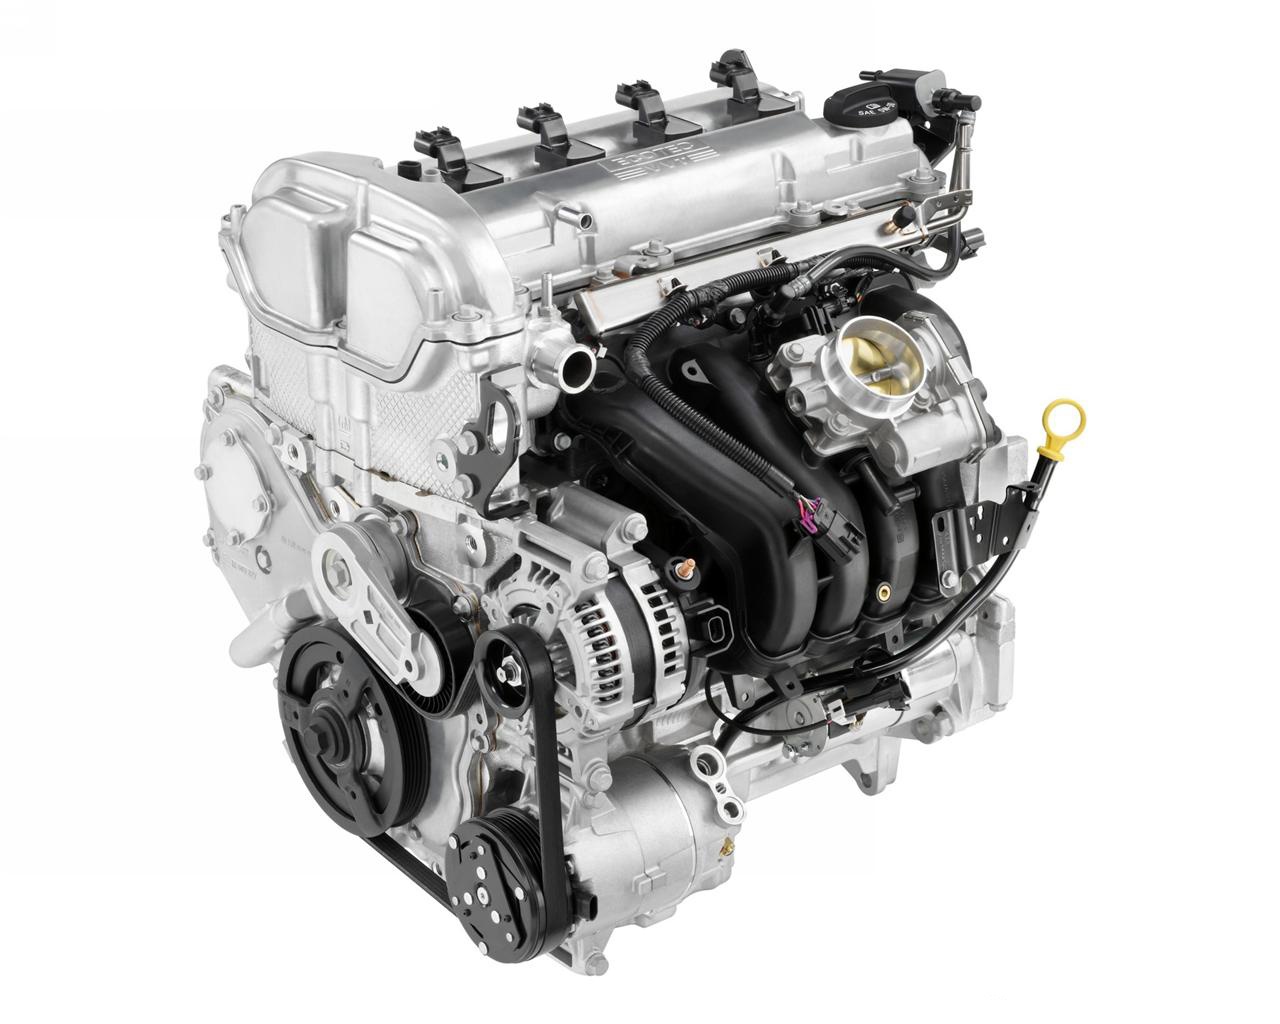 2008 chevrolet malibu engine 2.4 l 4 cylinder